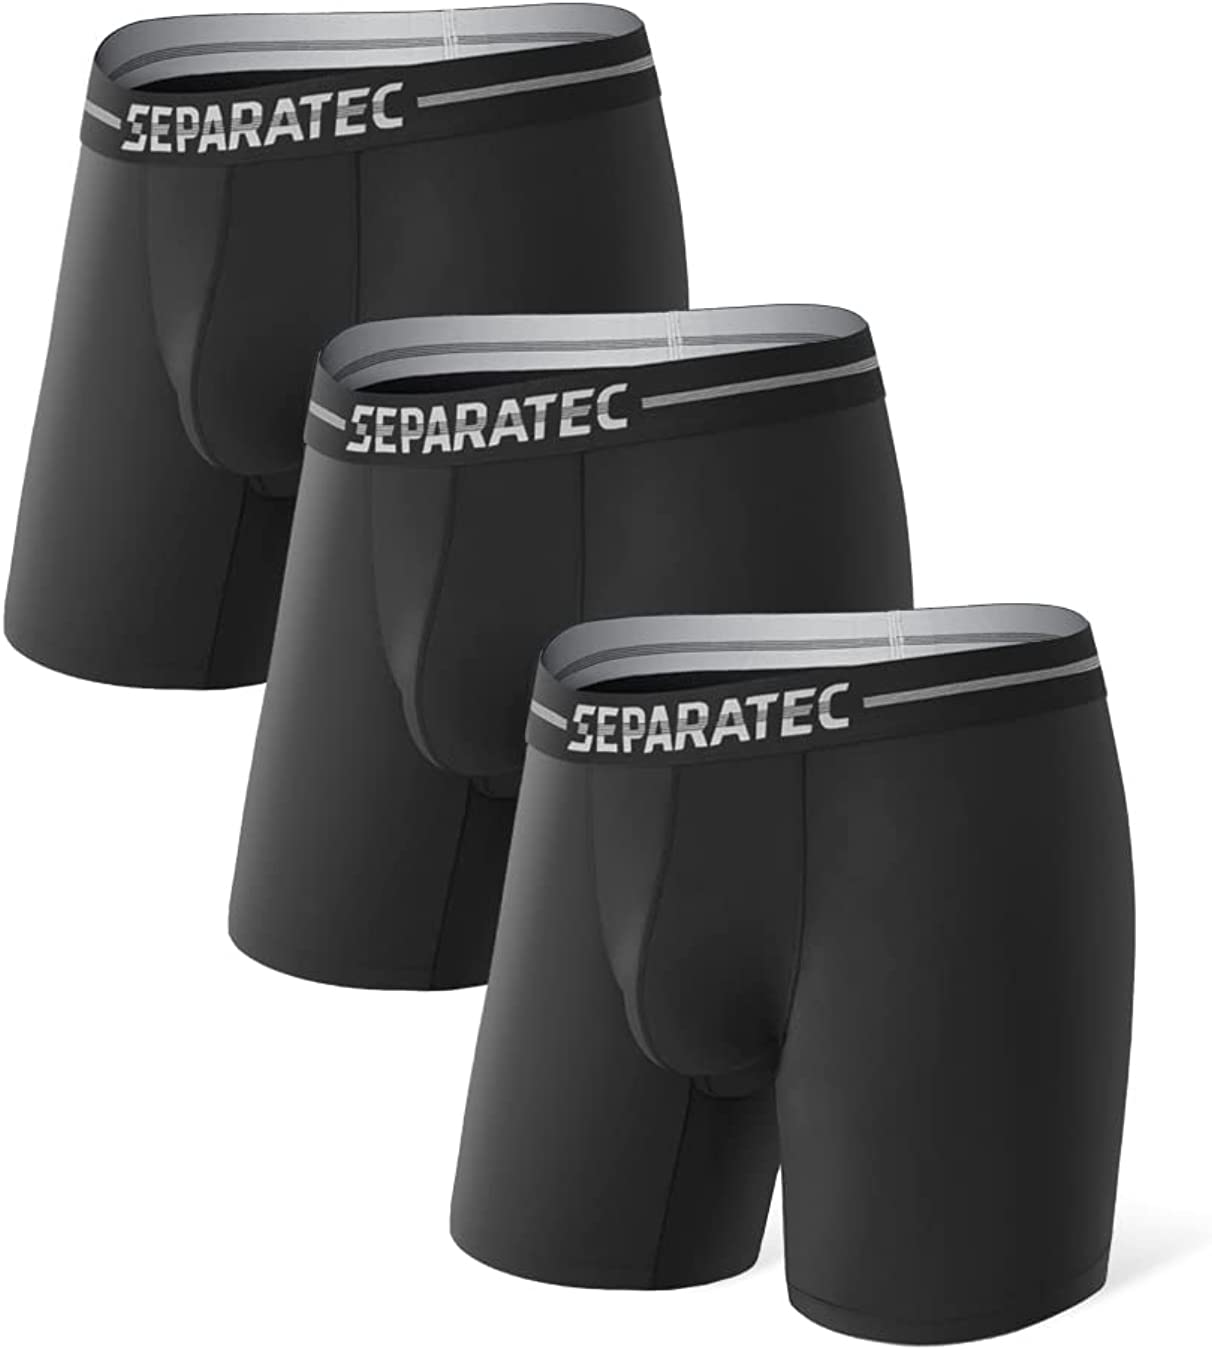 Separatec Men's Sport Underwear with Dual Pouch Nigeria